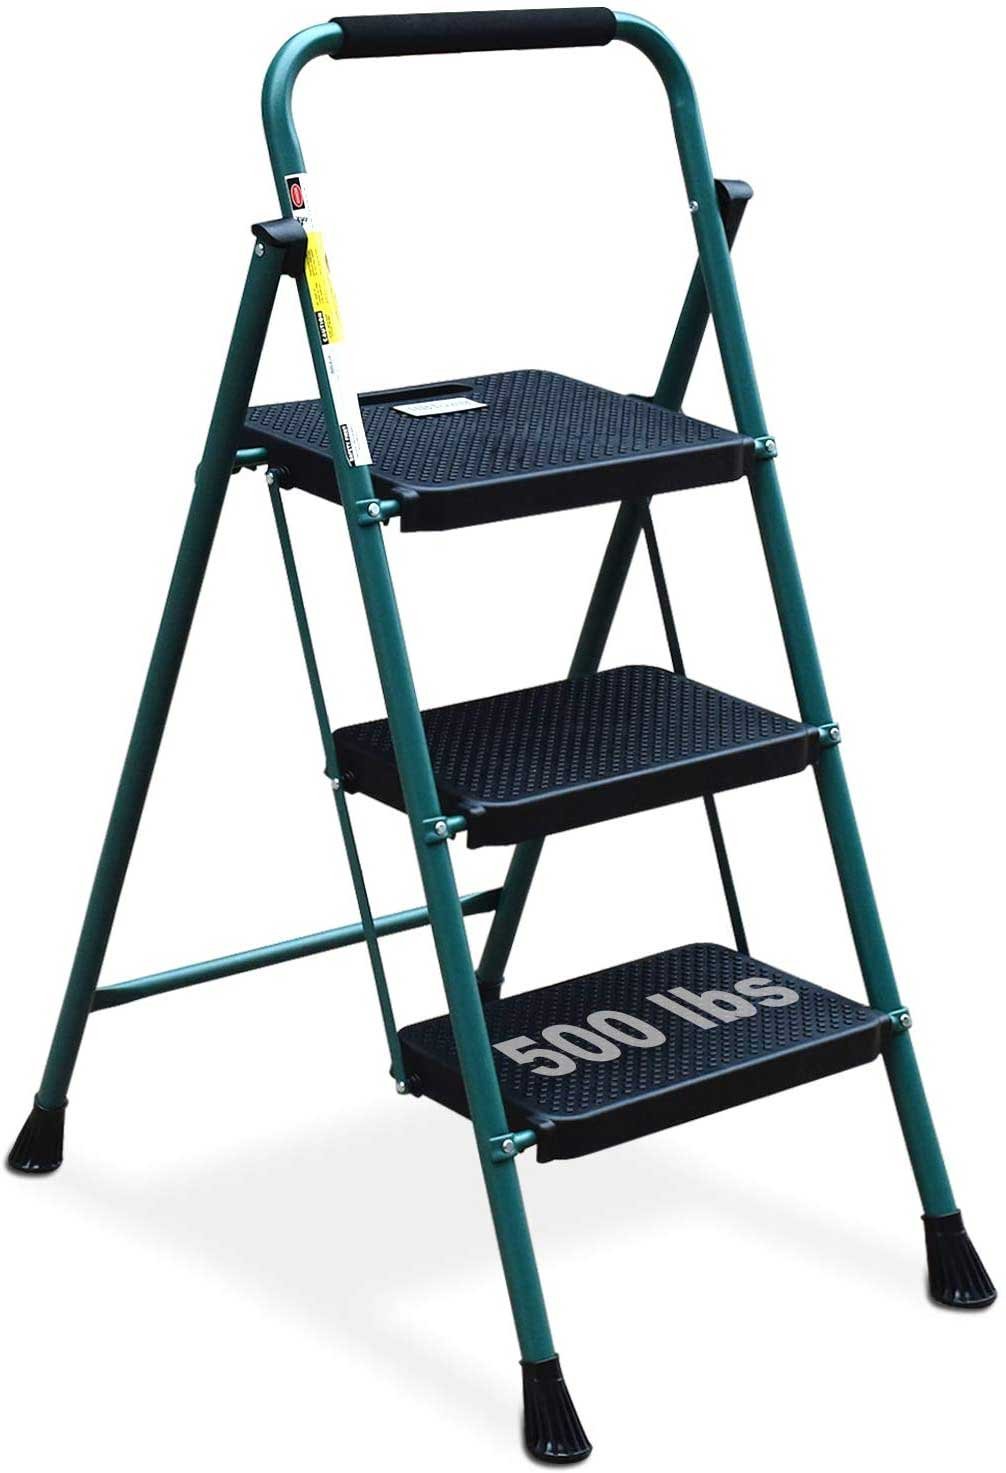 HBTower 3 Step Ladder with Anti-Slip Pedal - best step ladder